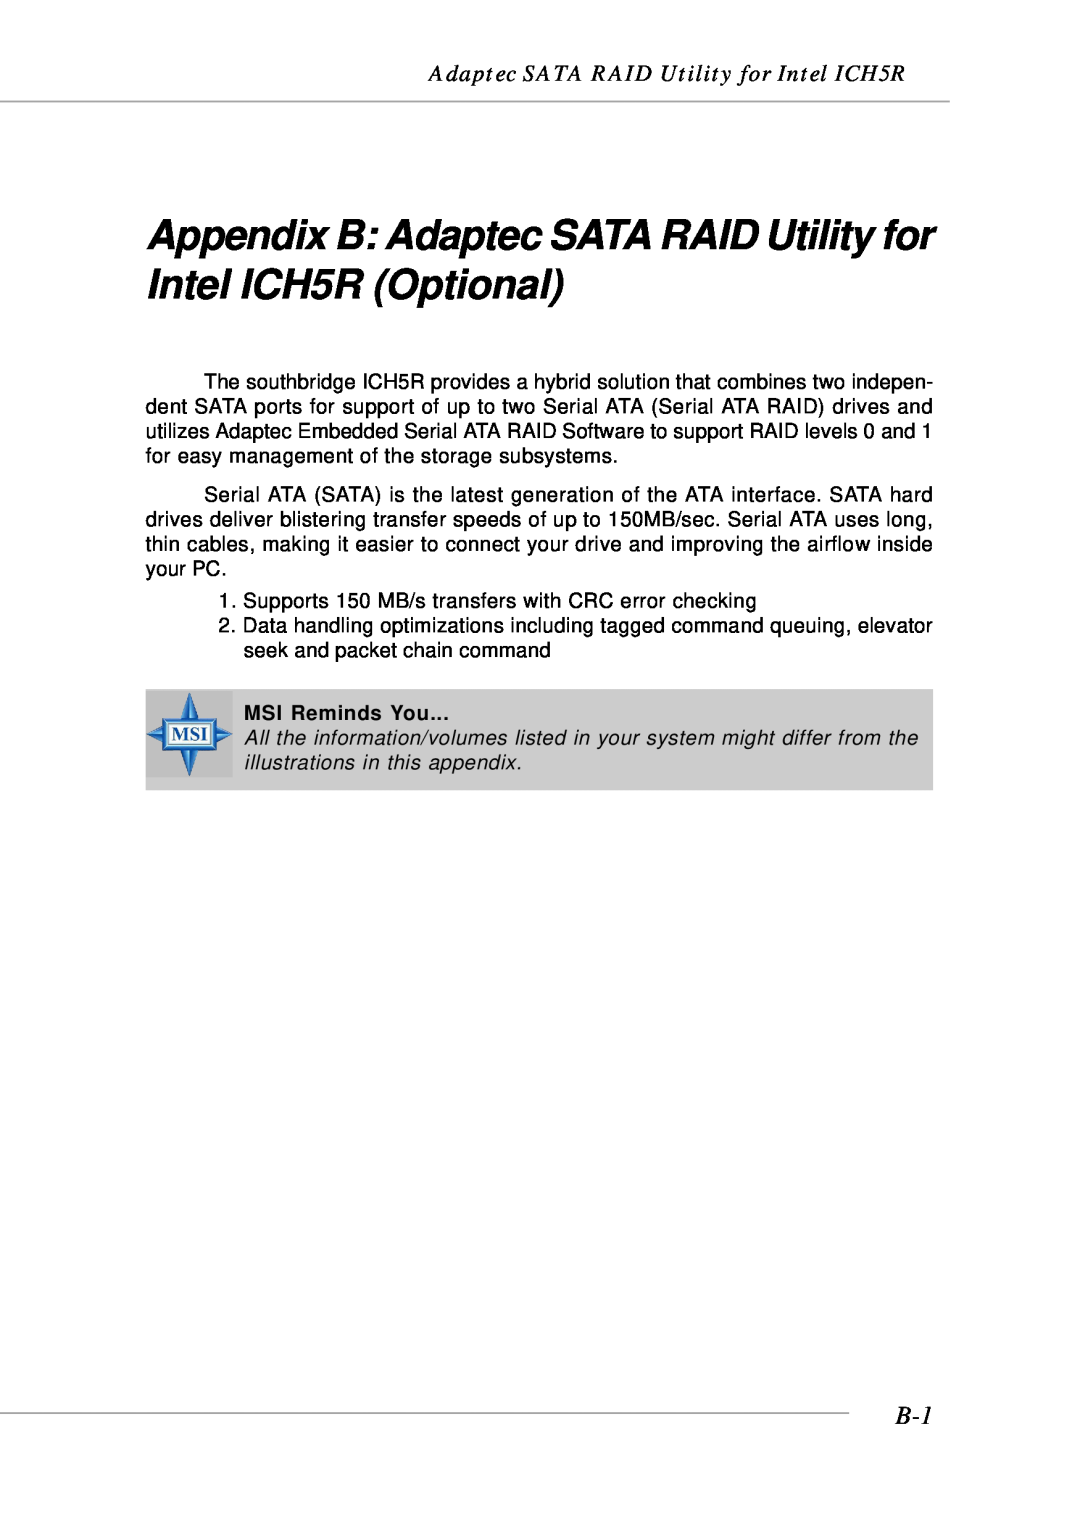 MSI MS-9246 manual Appendix B Adaptec SATA RAID Utility for Intel ICH5R Optional, MSI Reminds You 